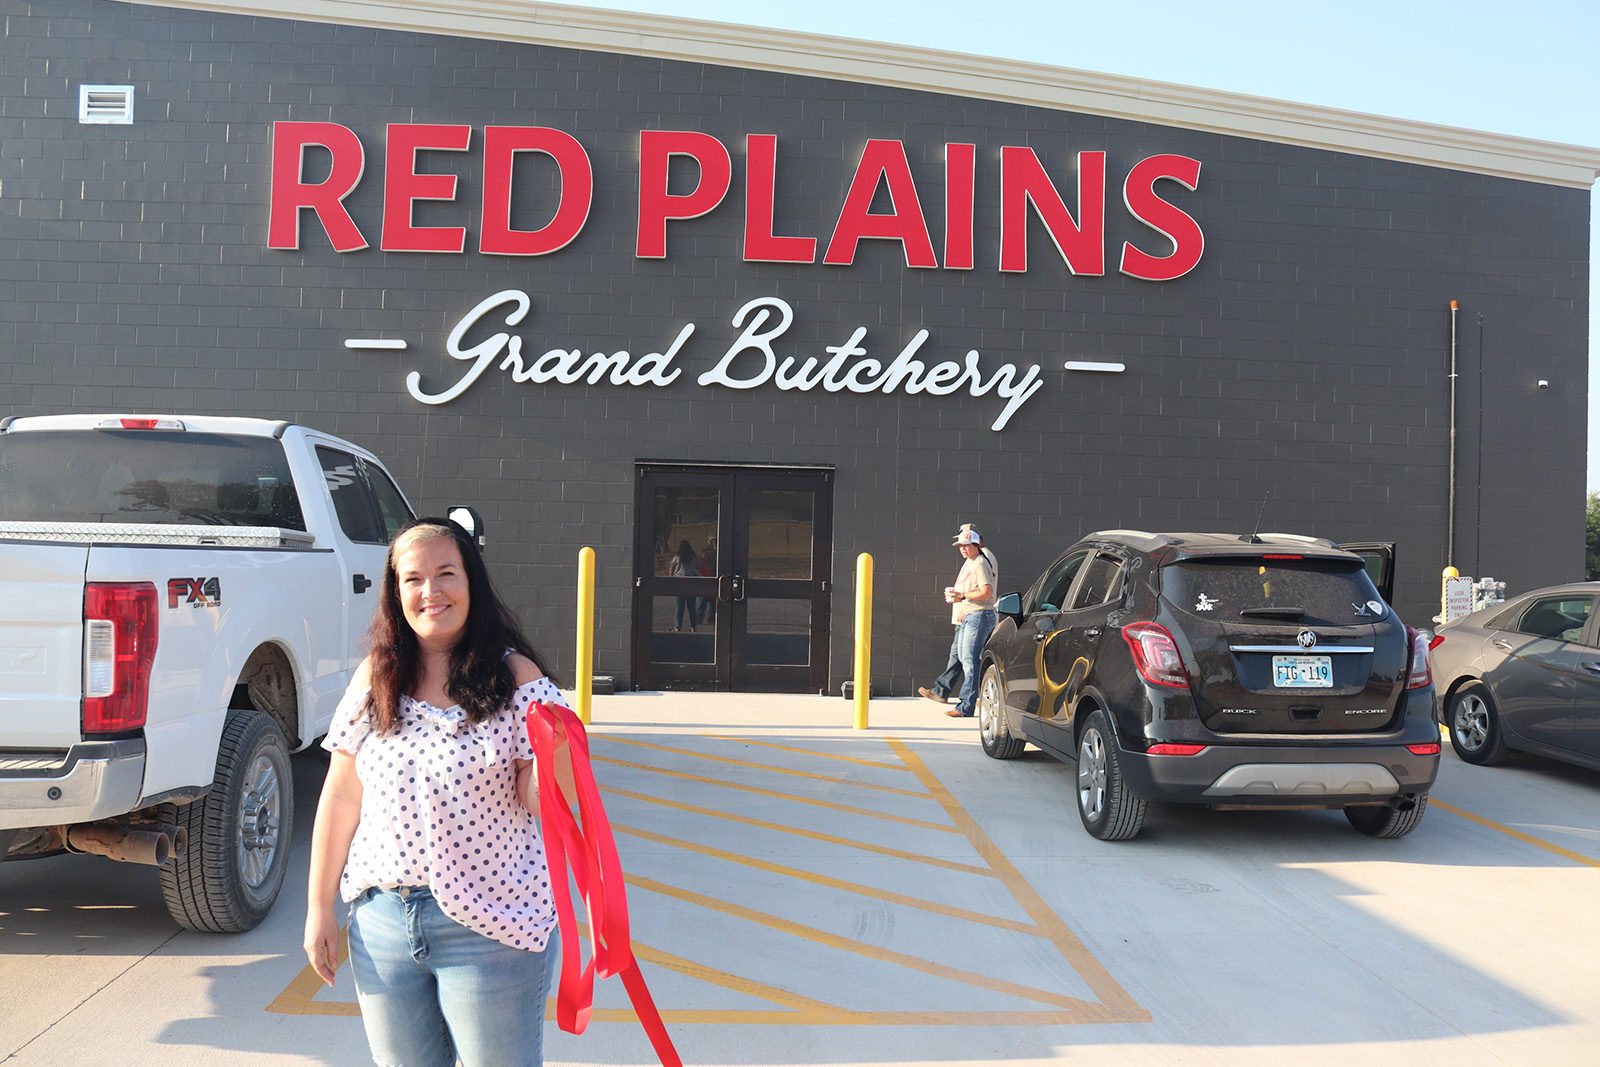 Red Plains Grand Butchery